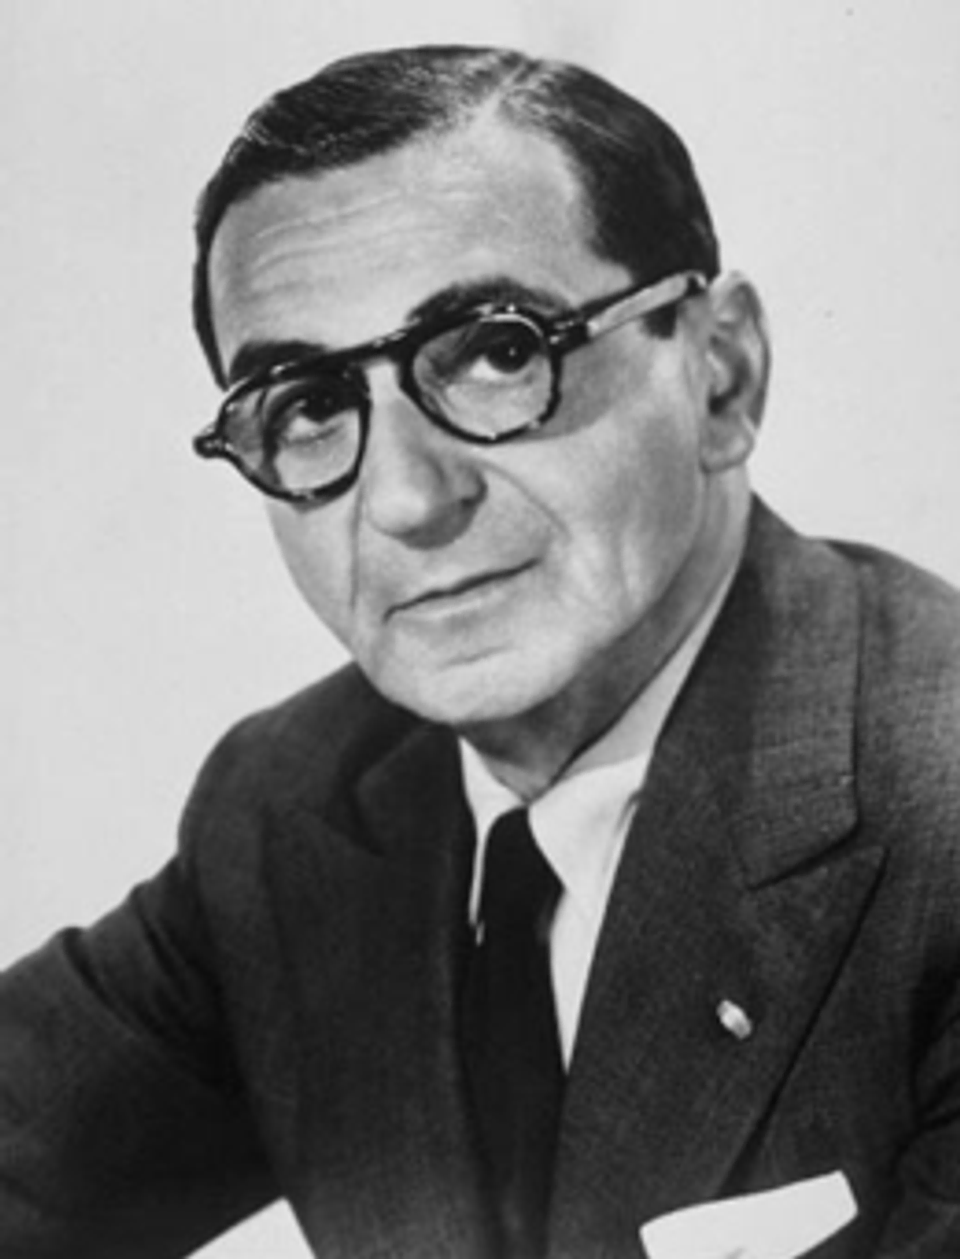 Portrait of Irving Belin.